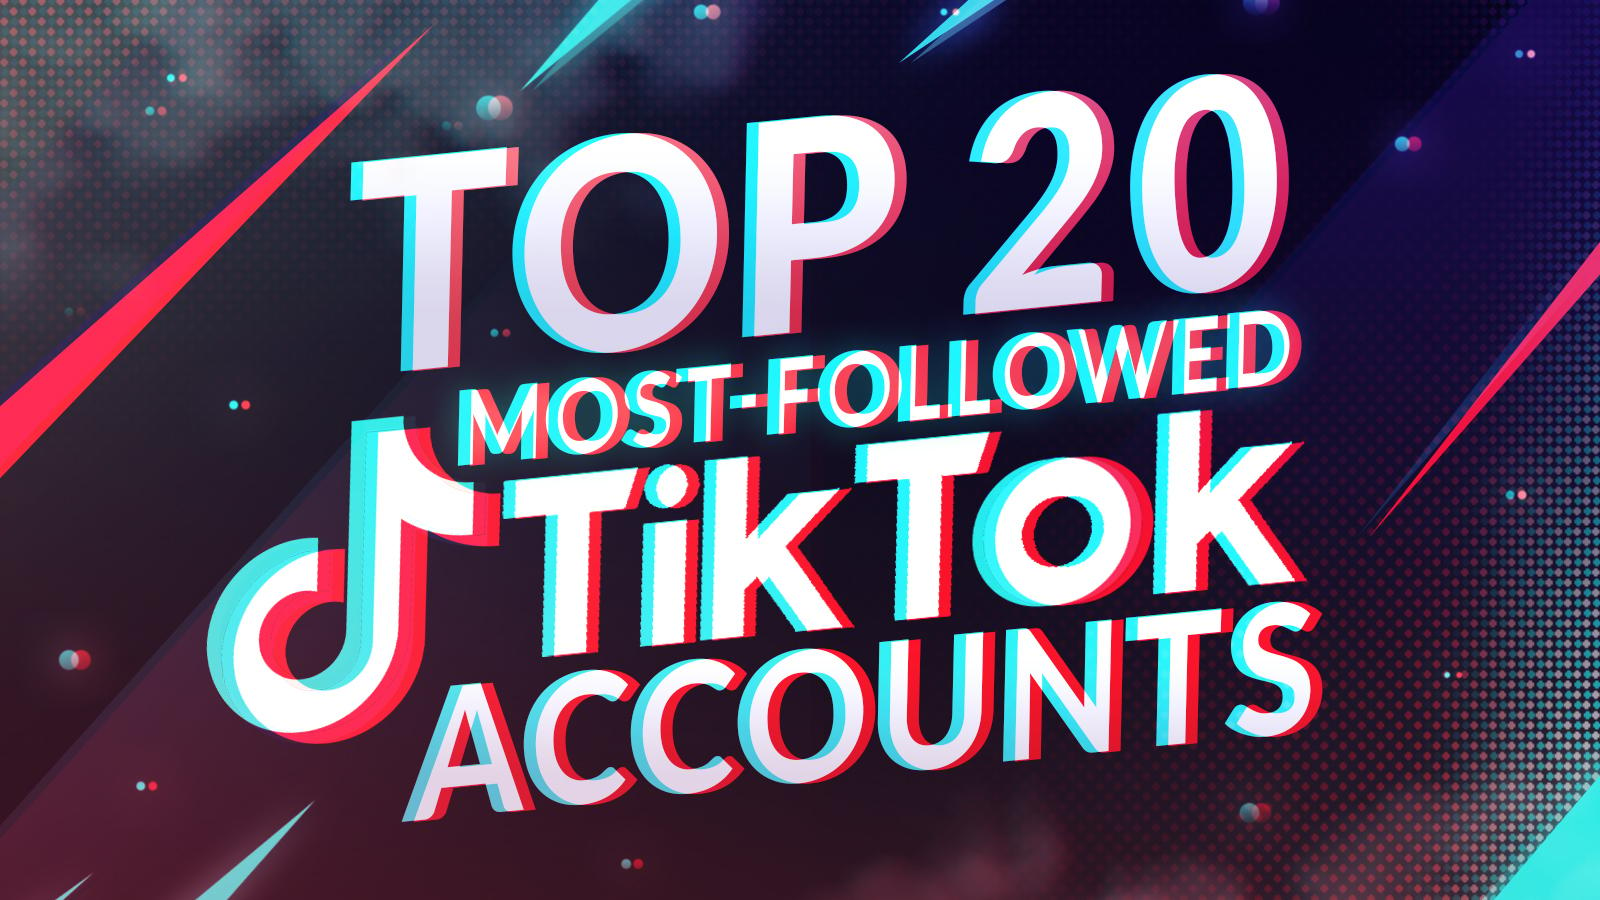 Top 20 Tiktok Followers Live Count 2020, Addison rae, Charli D'amelio 😍 